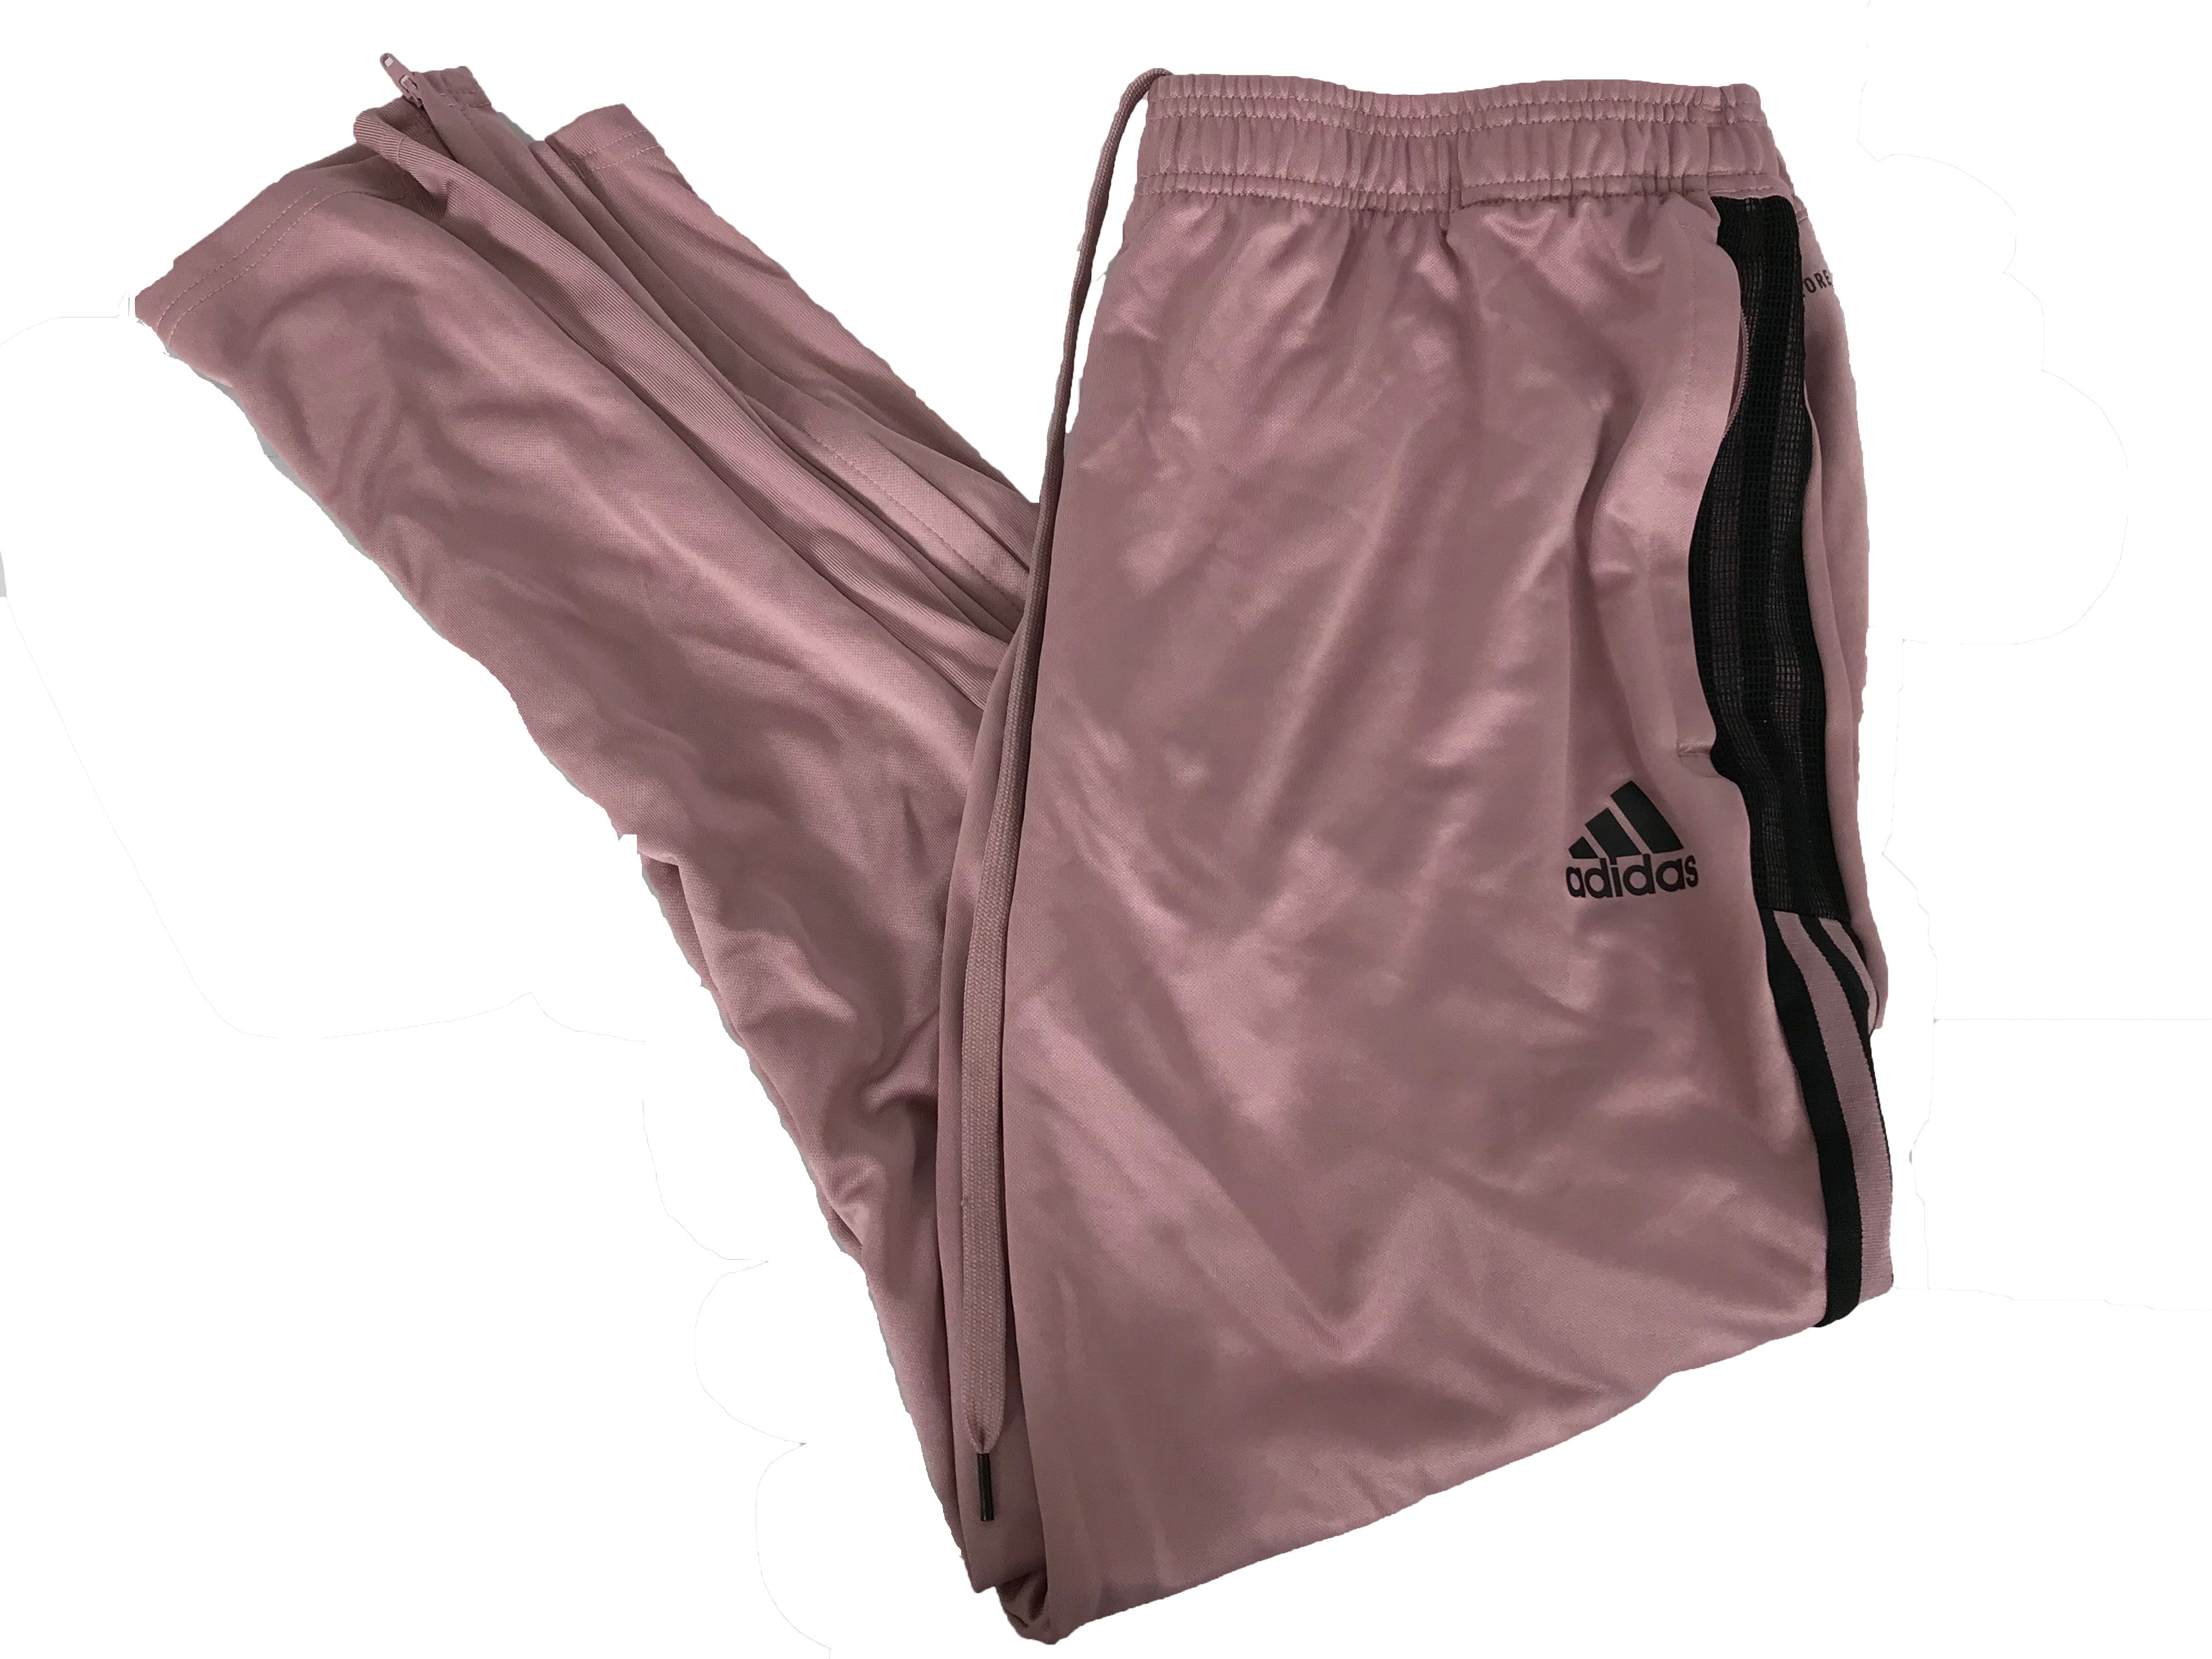 Adidas Pink Sweatpants Men's Size XL